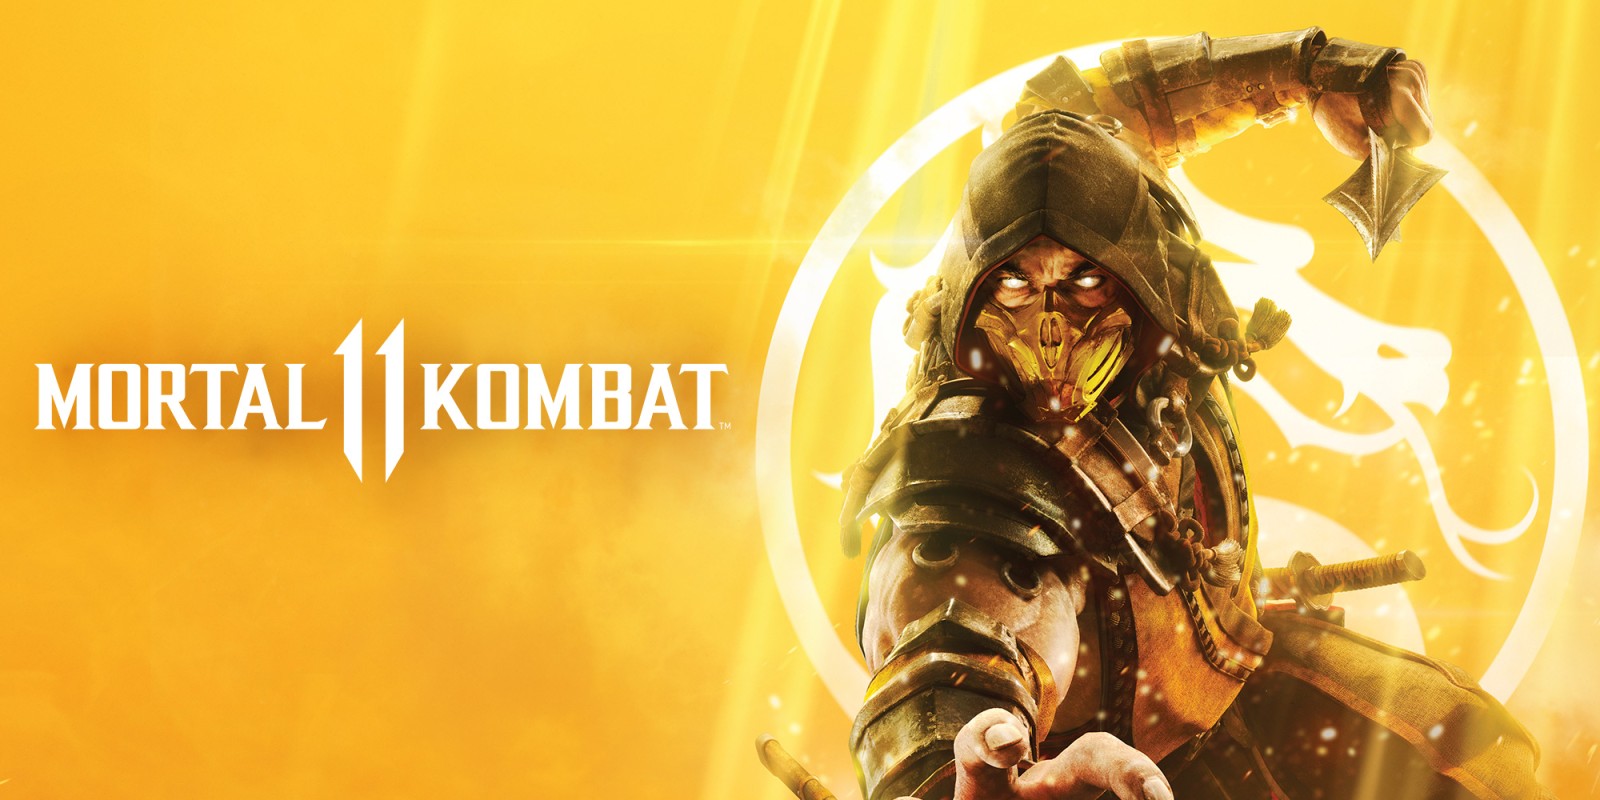 Mortal Kombat 11 Xbox One 